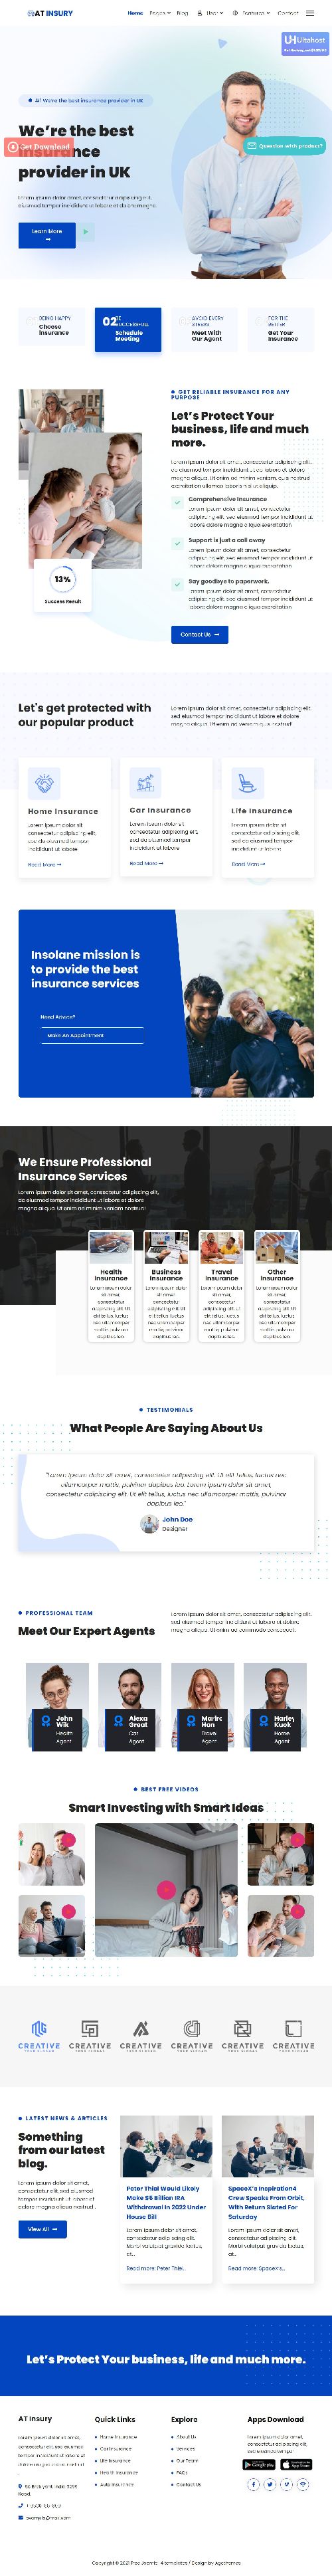 Insury - Insurance Sector Broker Joomla Template Website